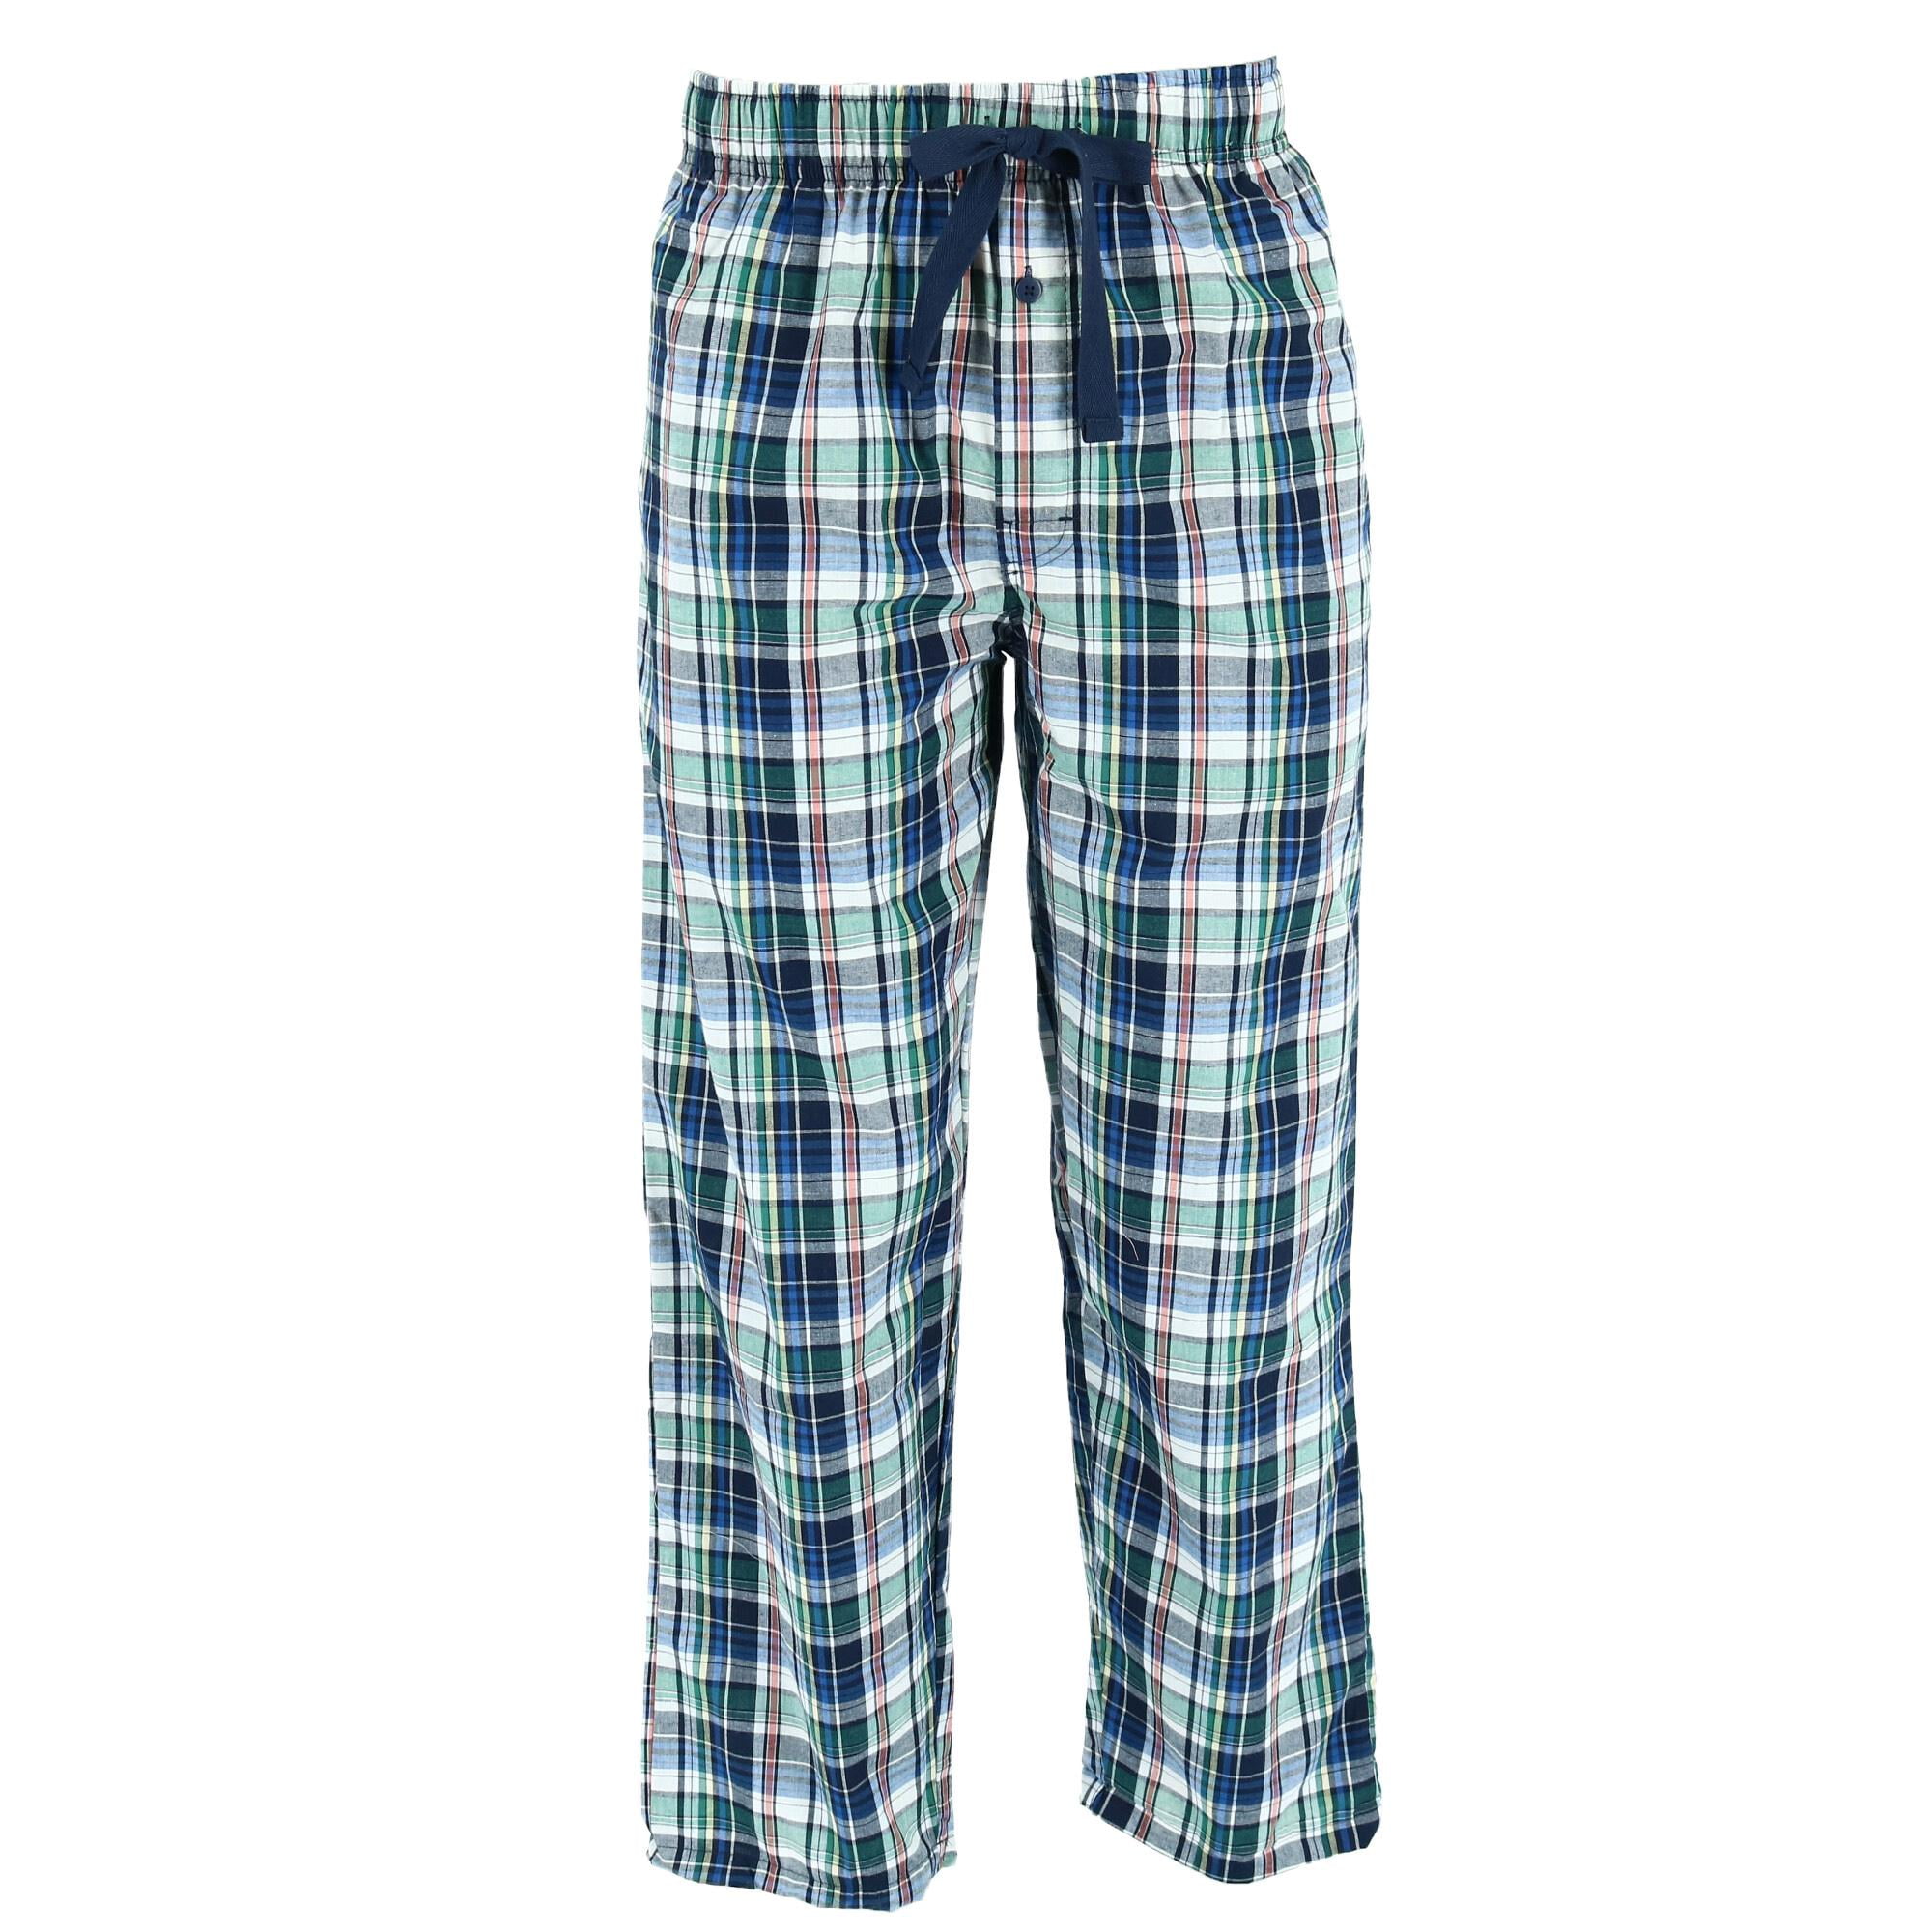 Fruit of the Loom Men's Woven Plaid Sleep Pants | Walmart Canada